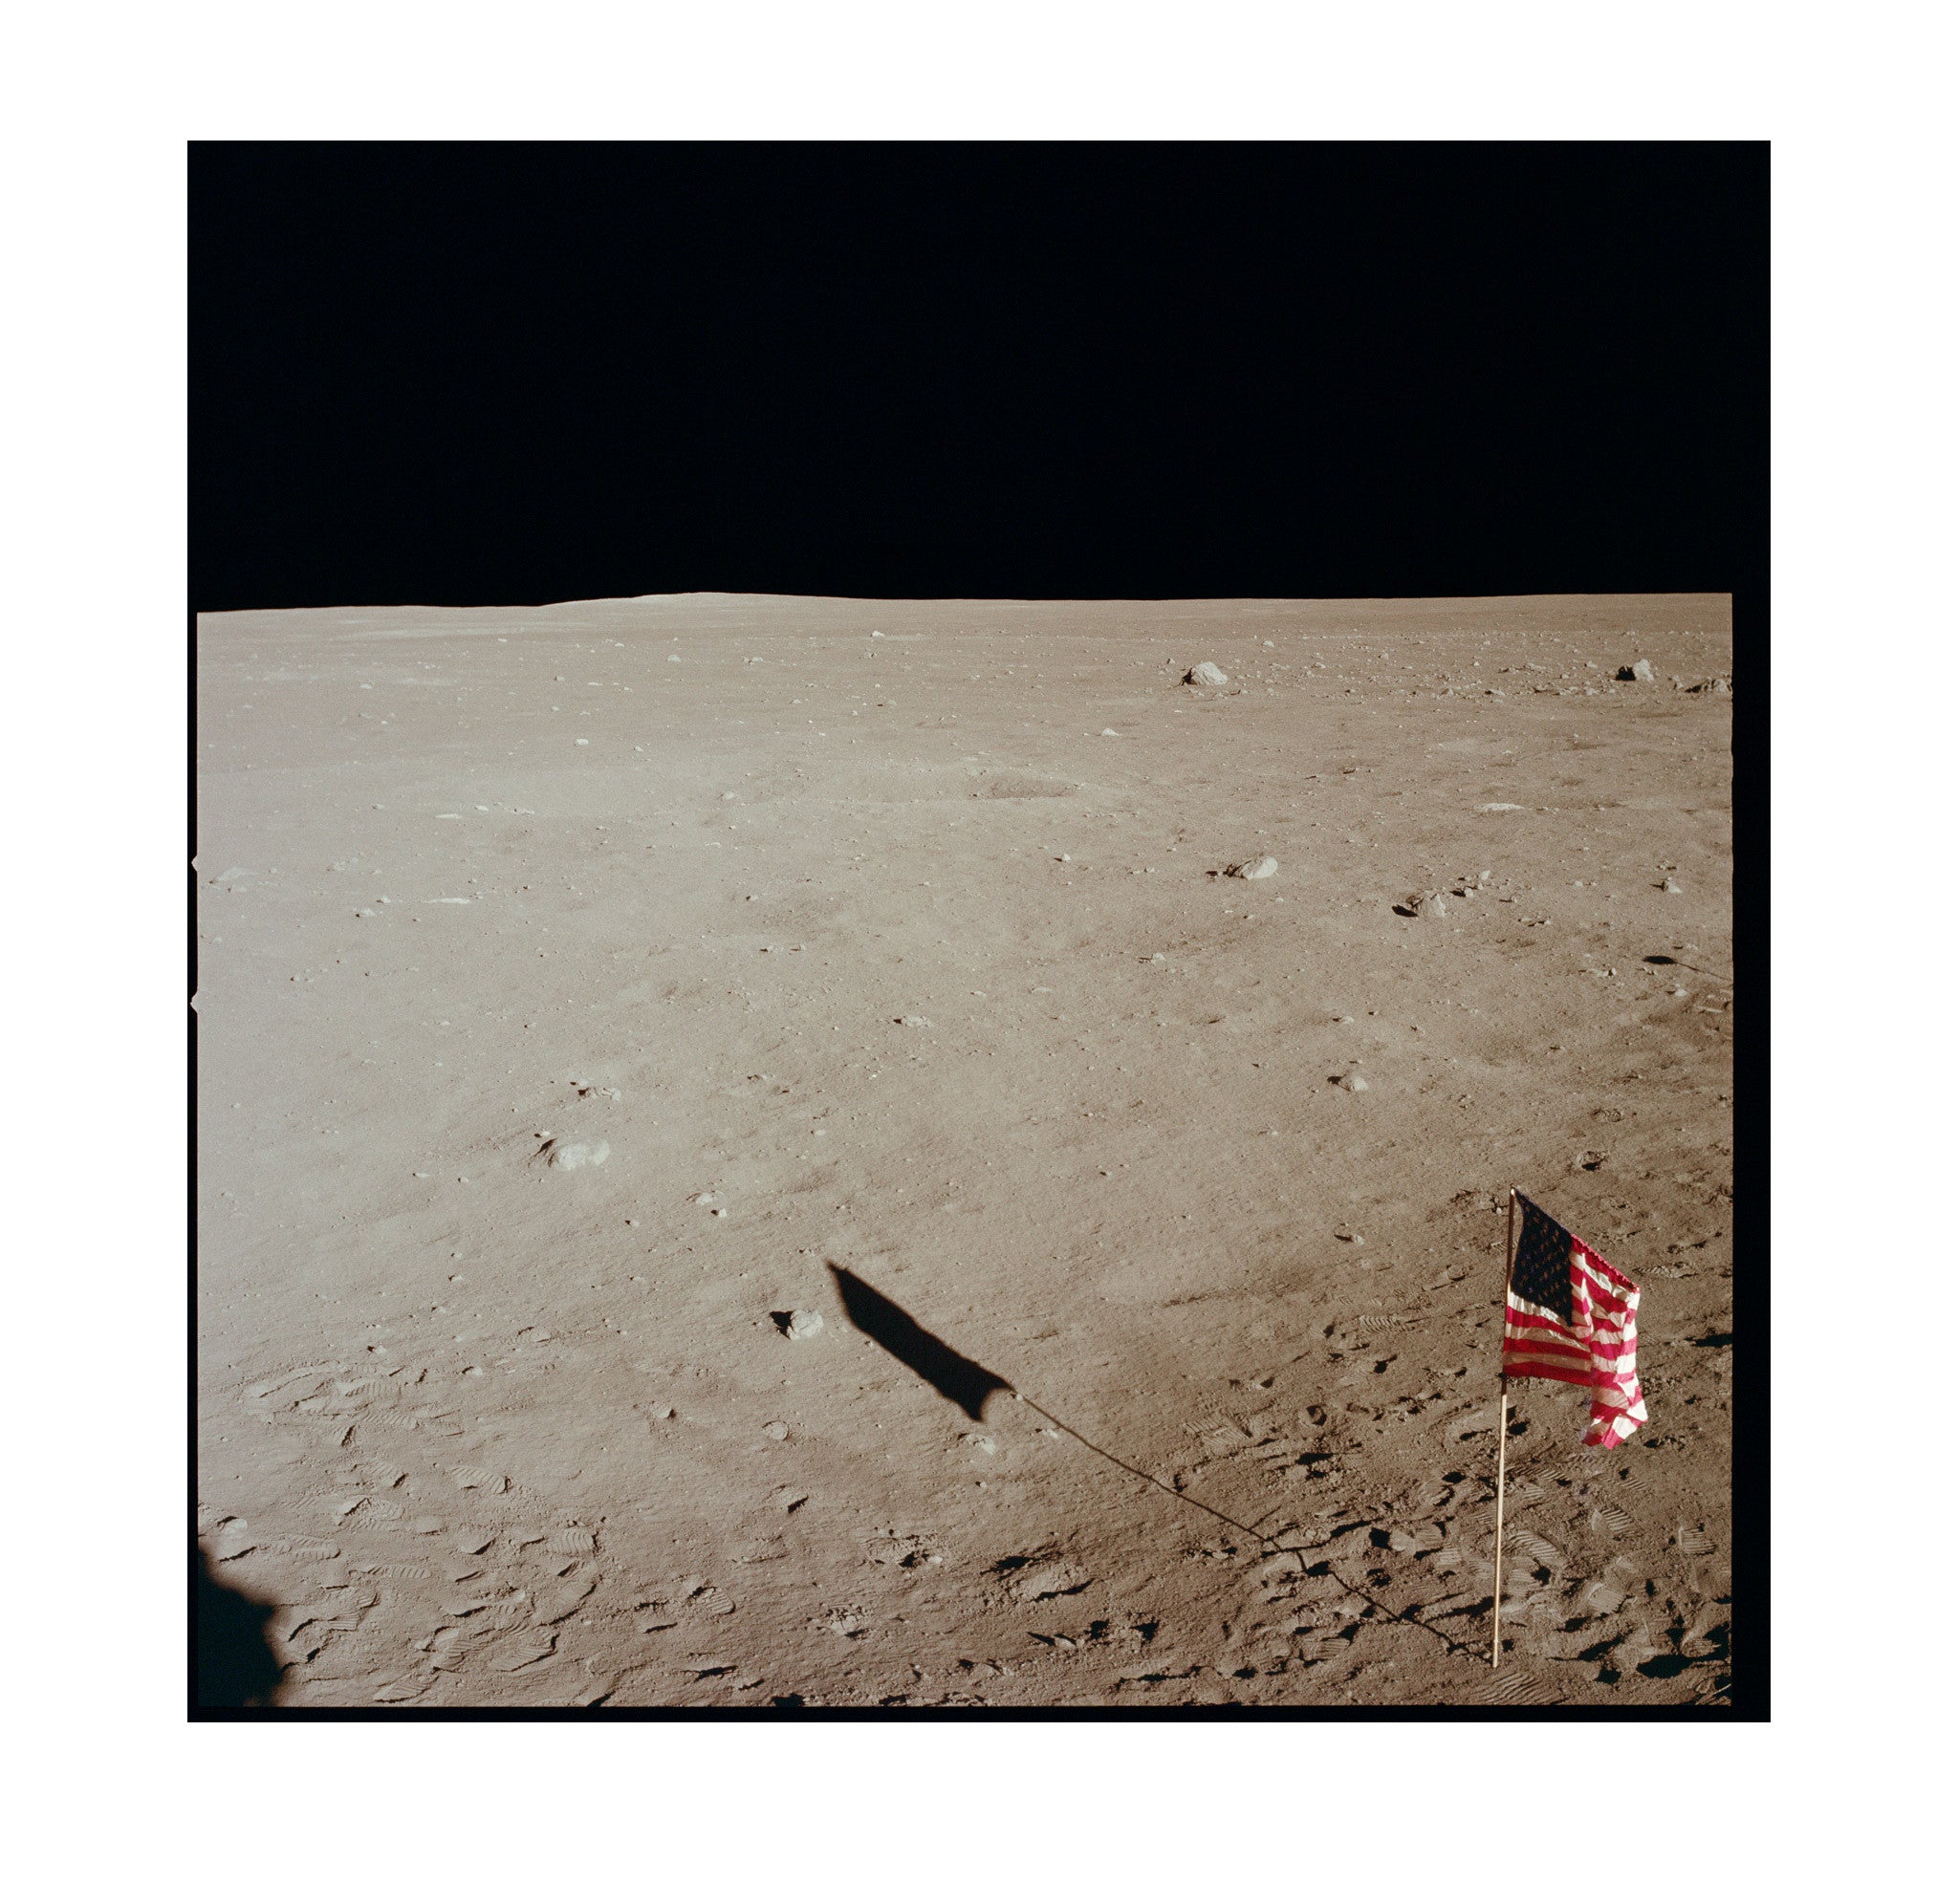 Apollo 11 – Tranquility Base